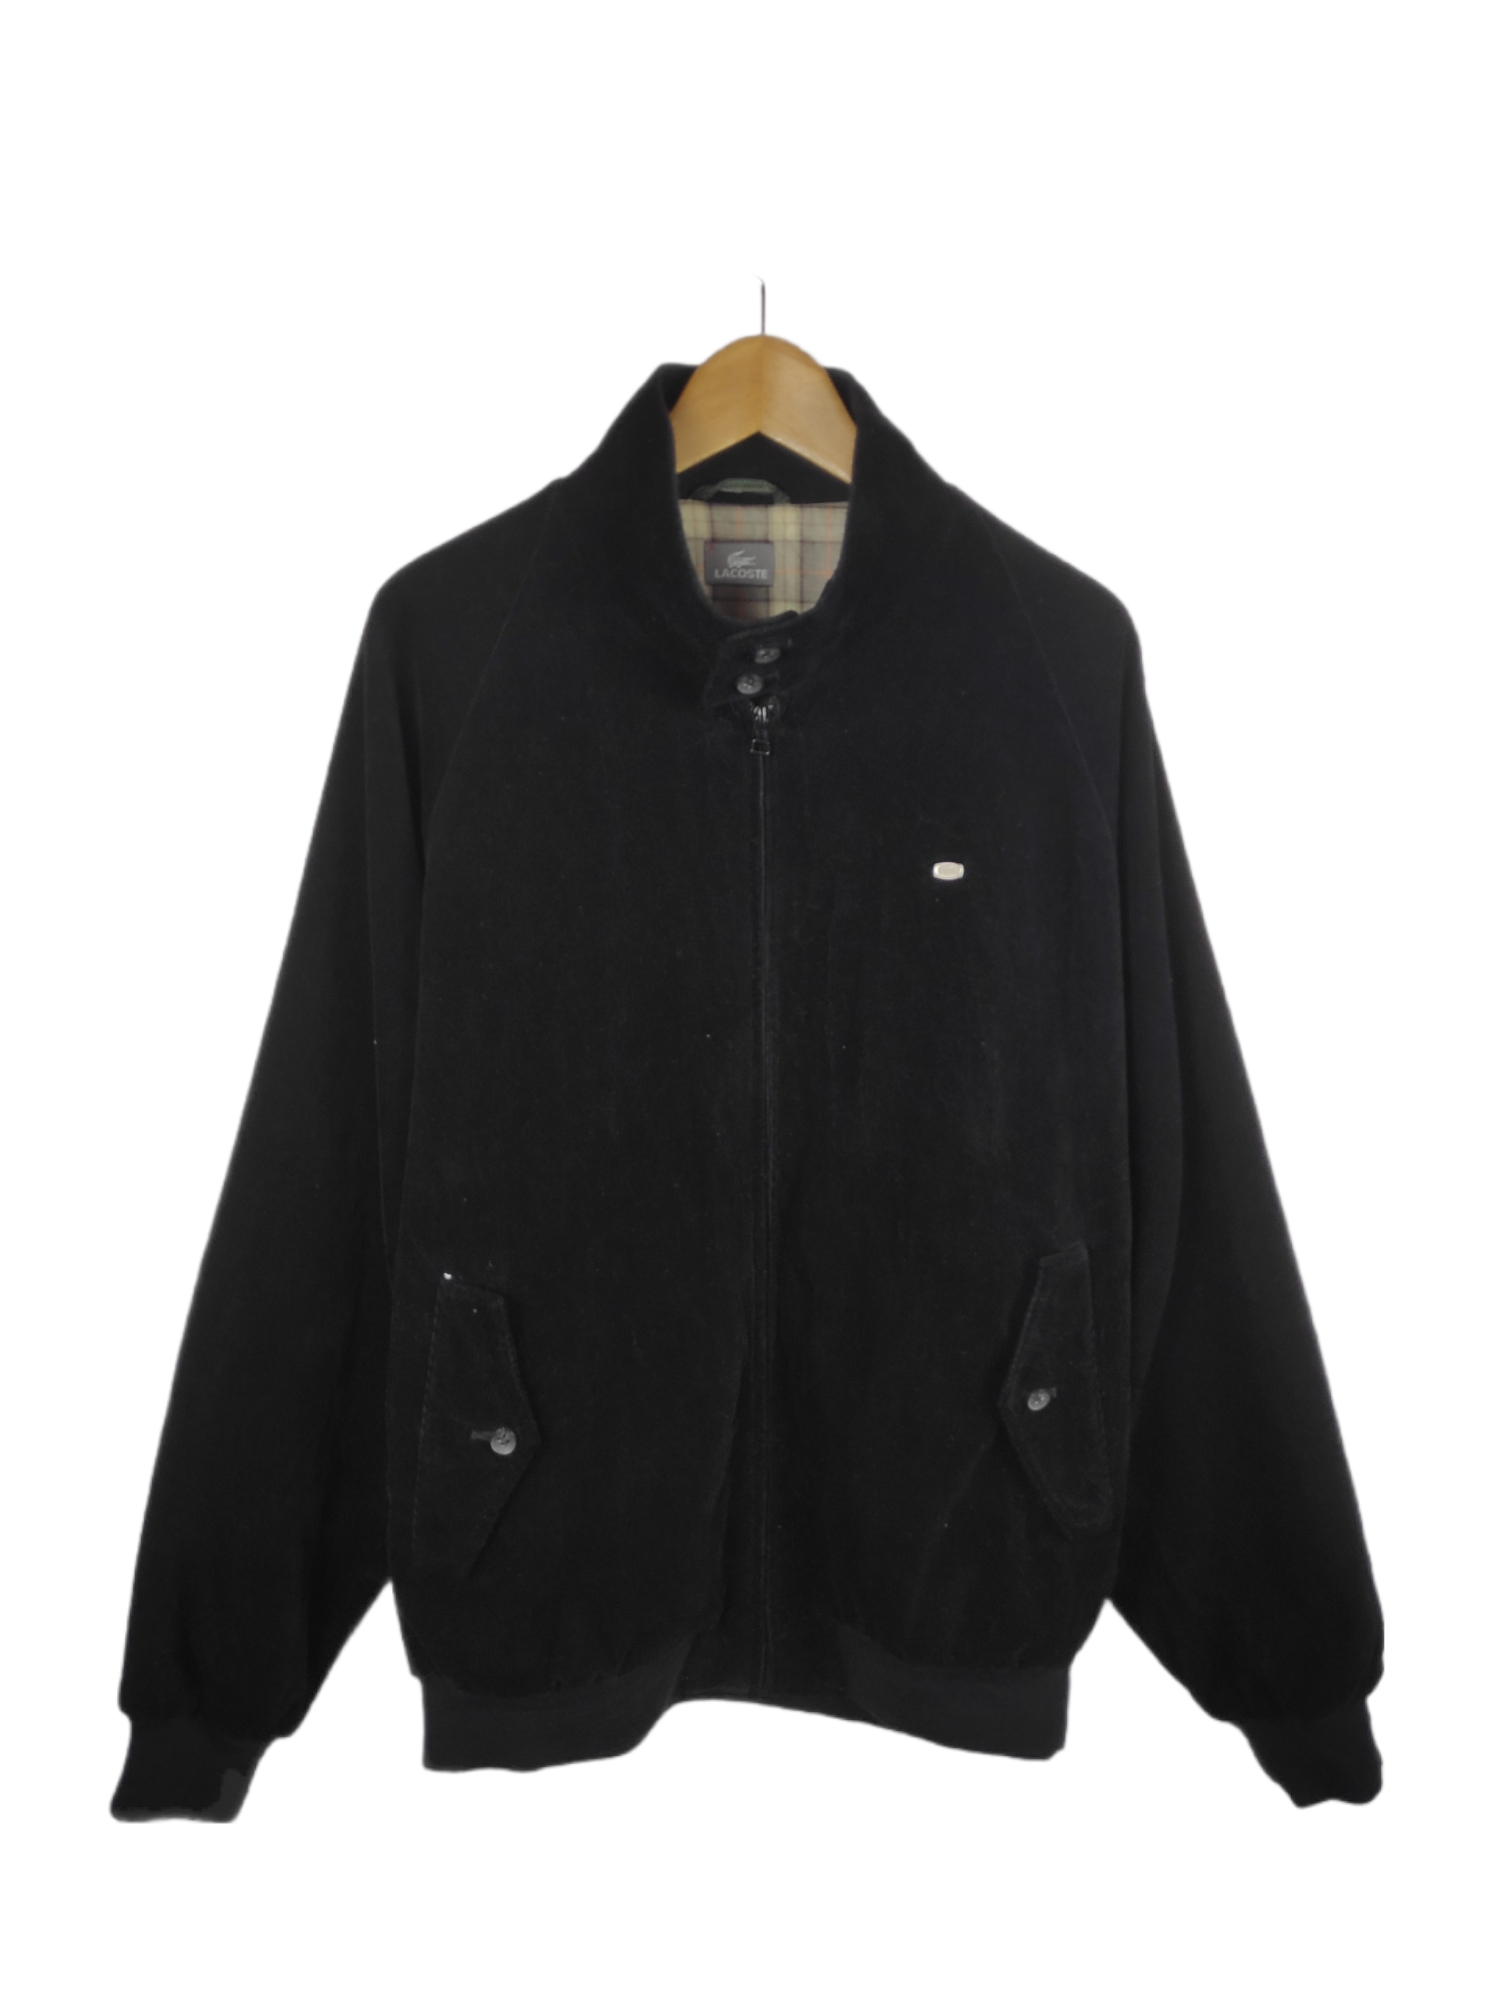 Vintage Lacoste Japan Made Corduroy Harrington Jacket - 1